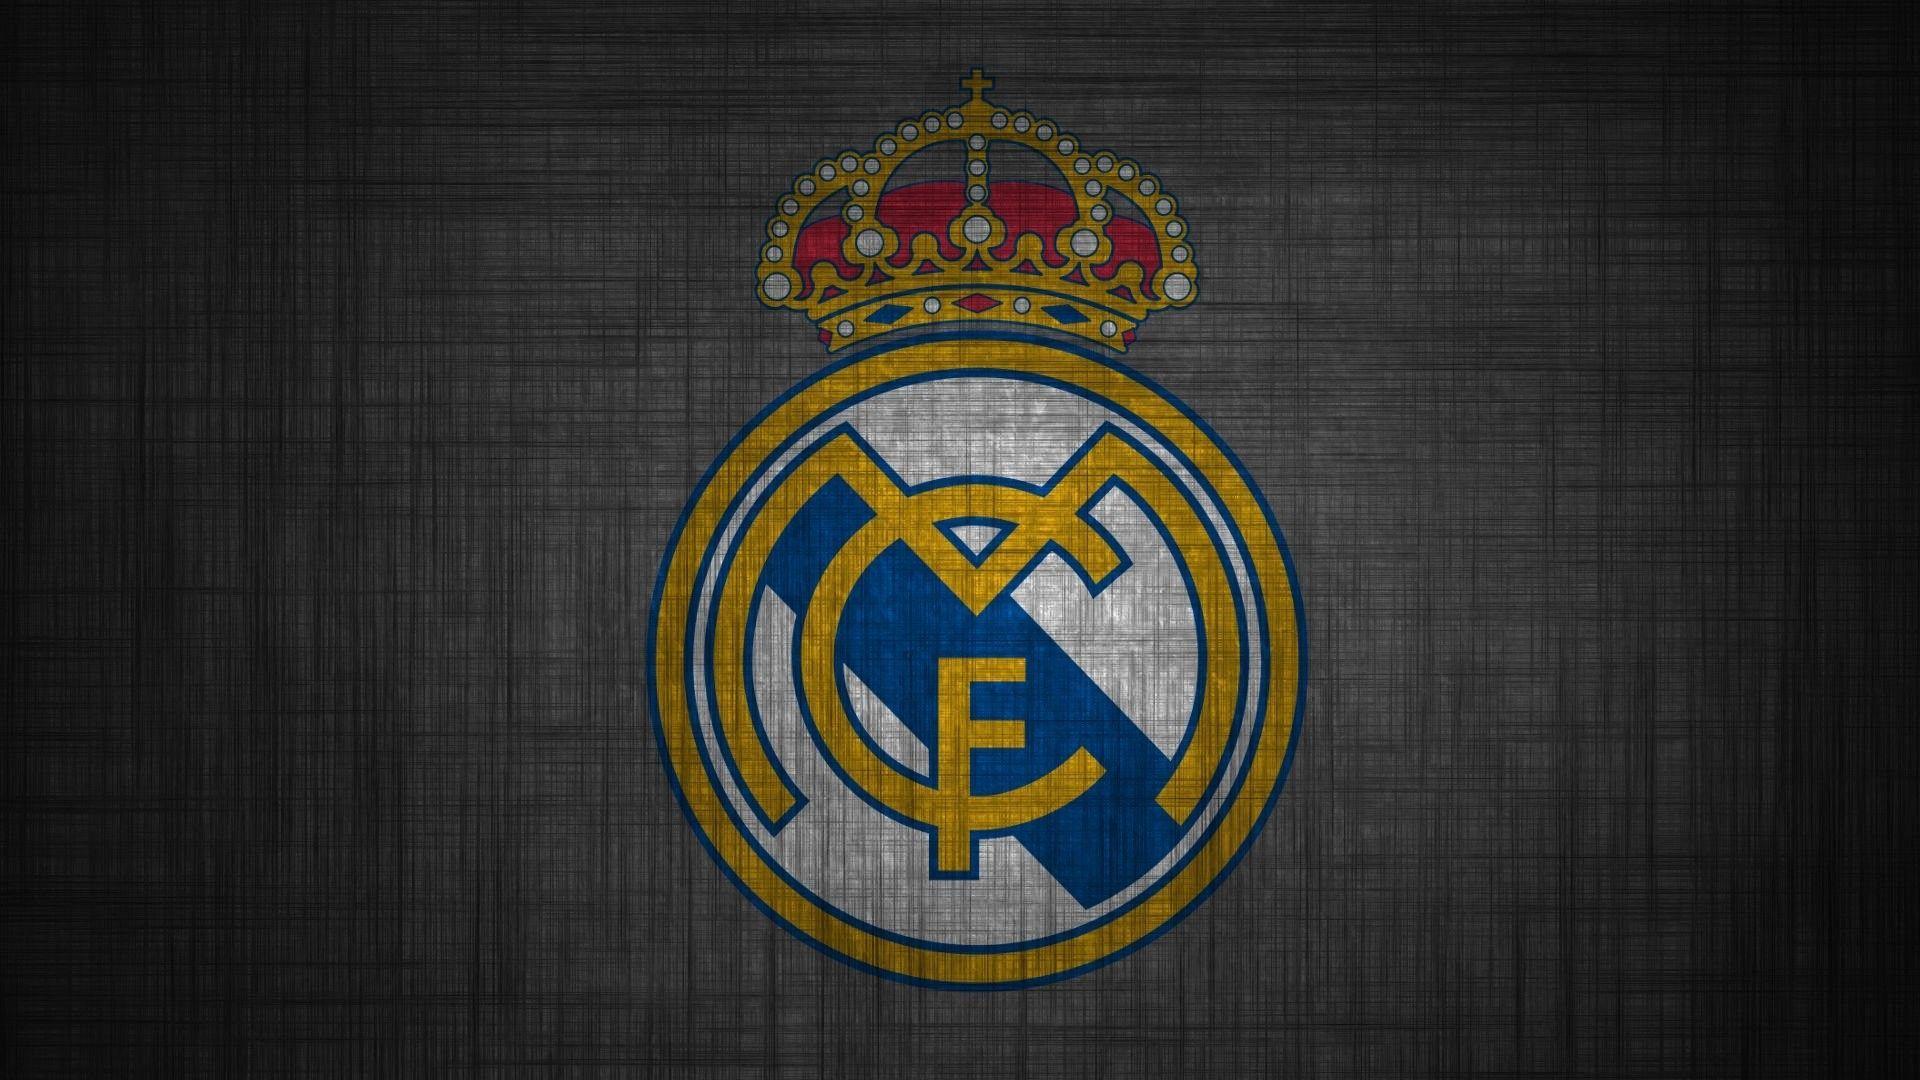 HD Real Madrid CF Background. Best Wallpaper HD. Wallpaper. Real